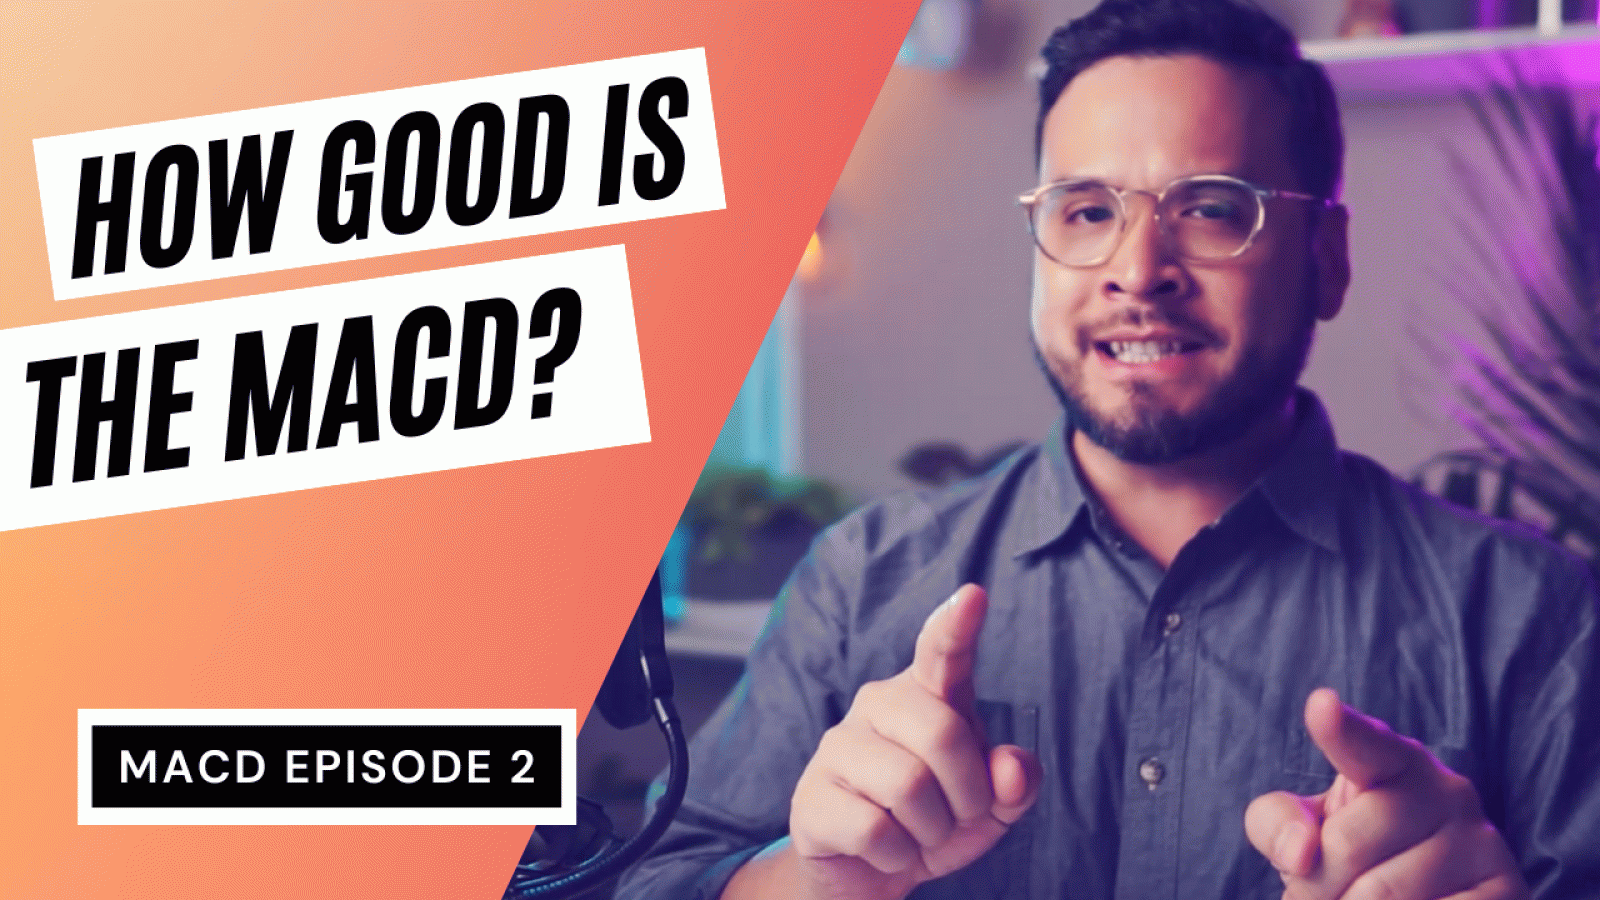 MACD Episode 2 How Good is the MACD?